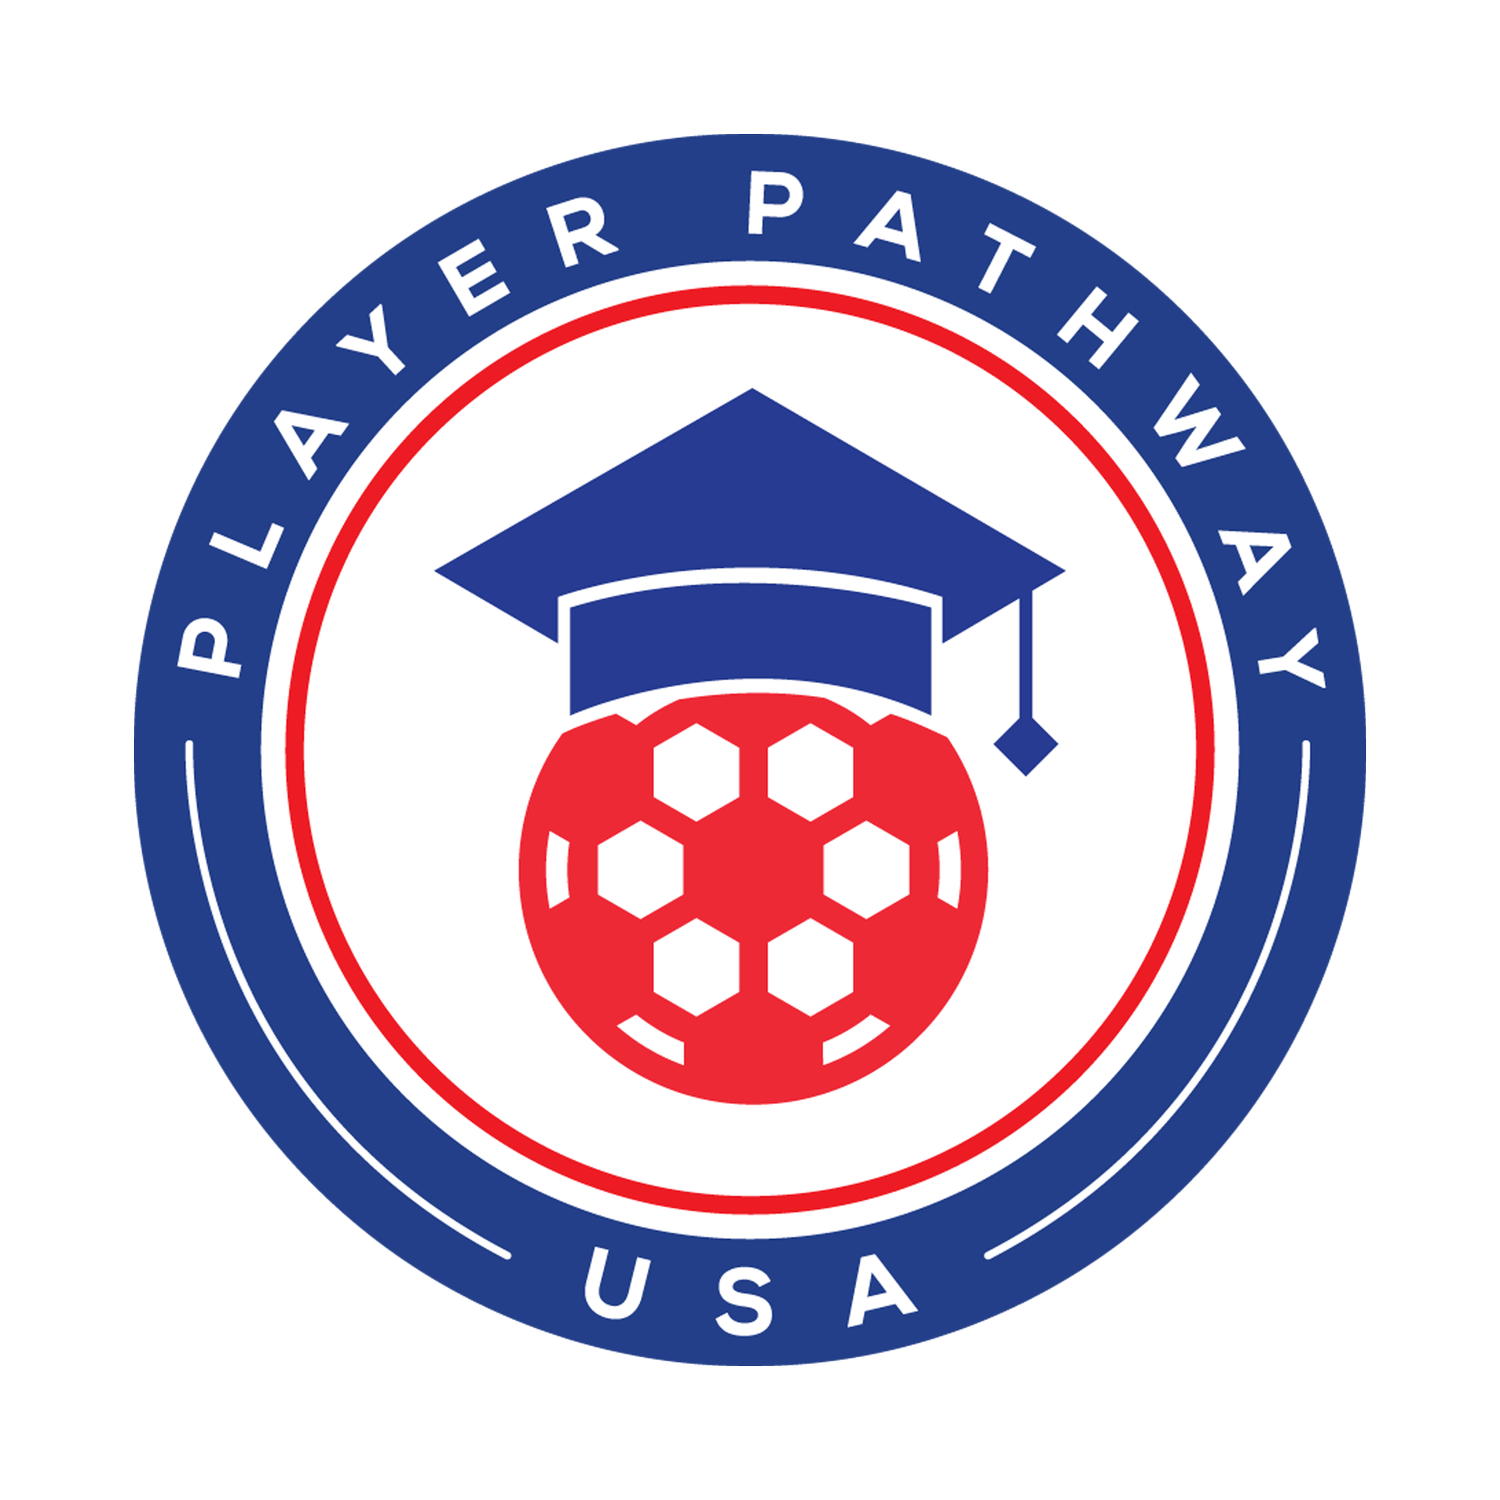 Player Pathway USA